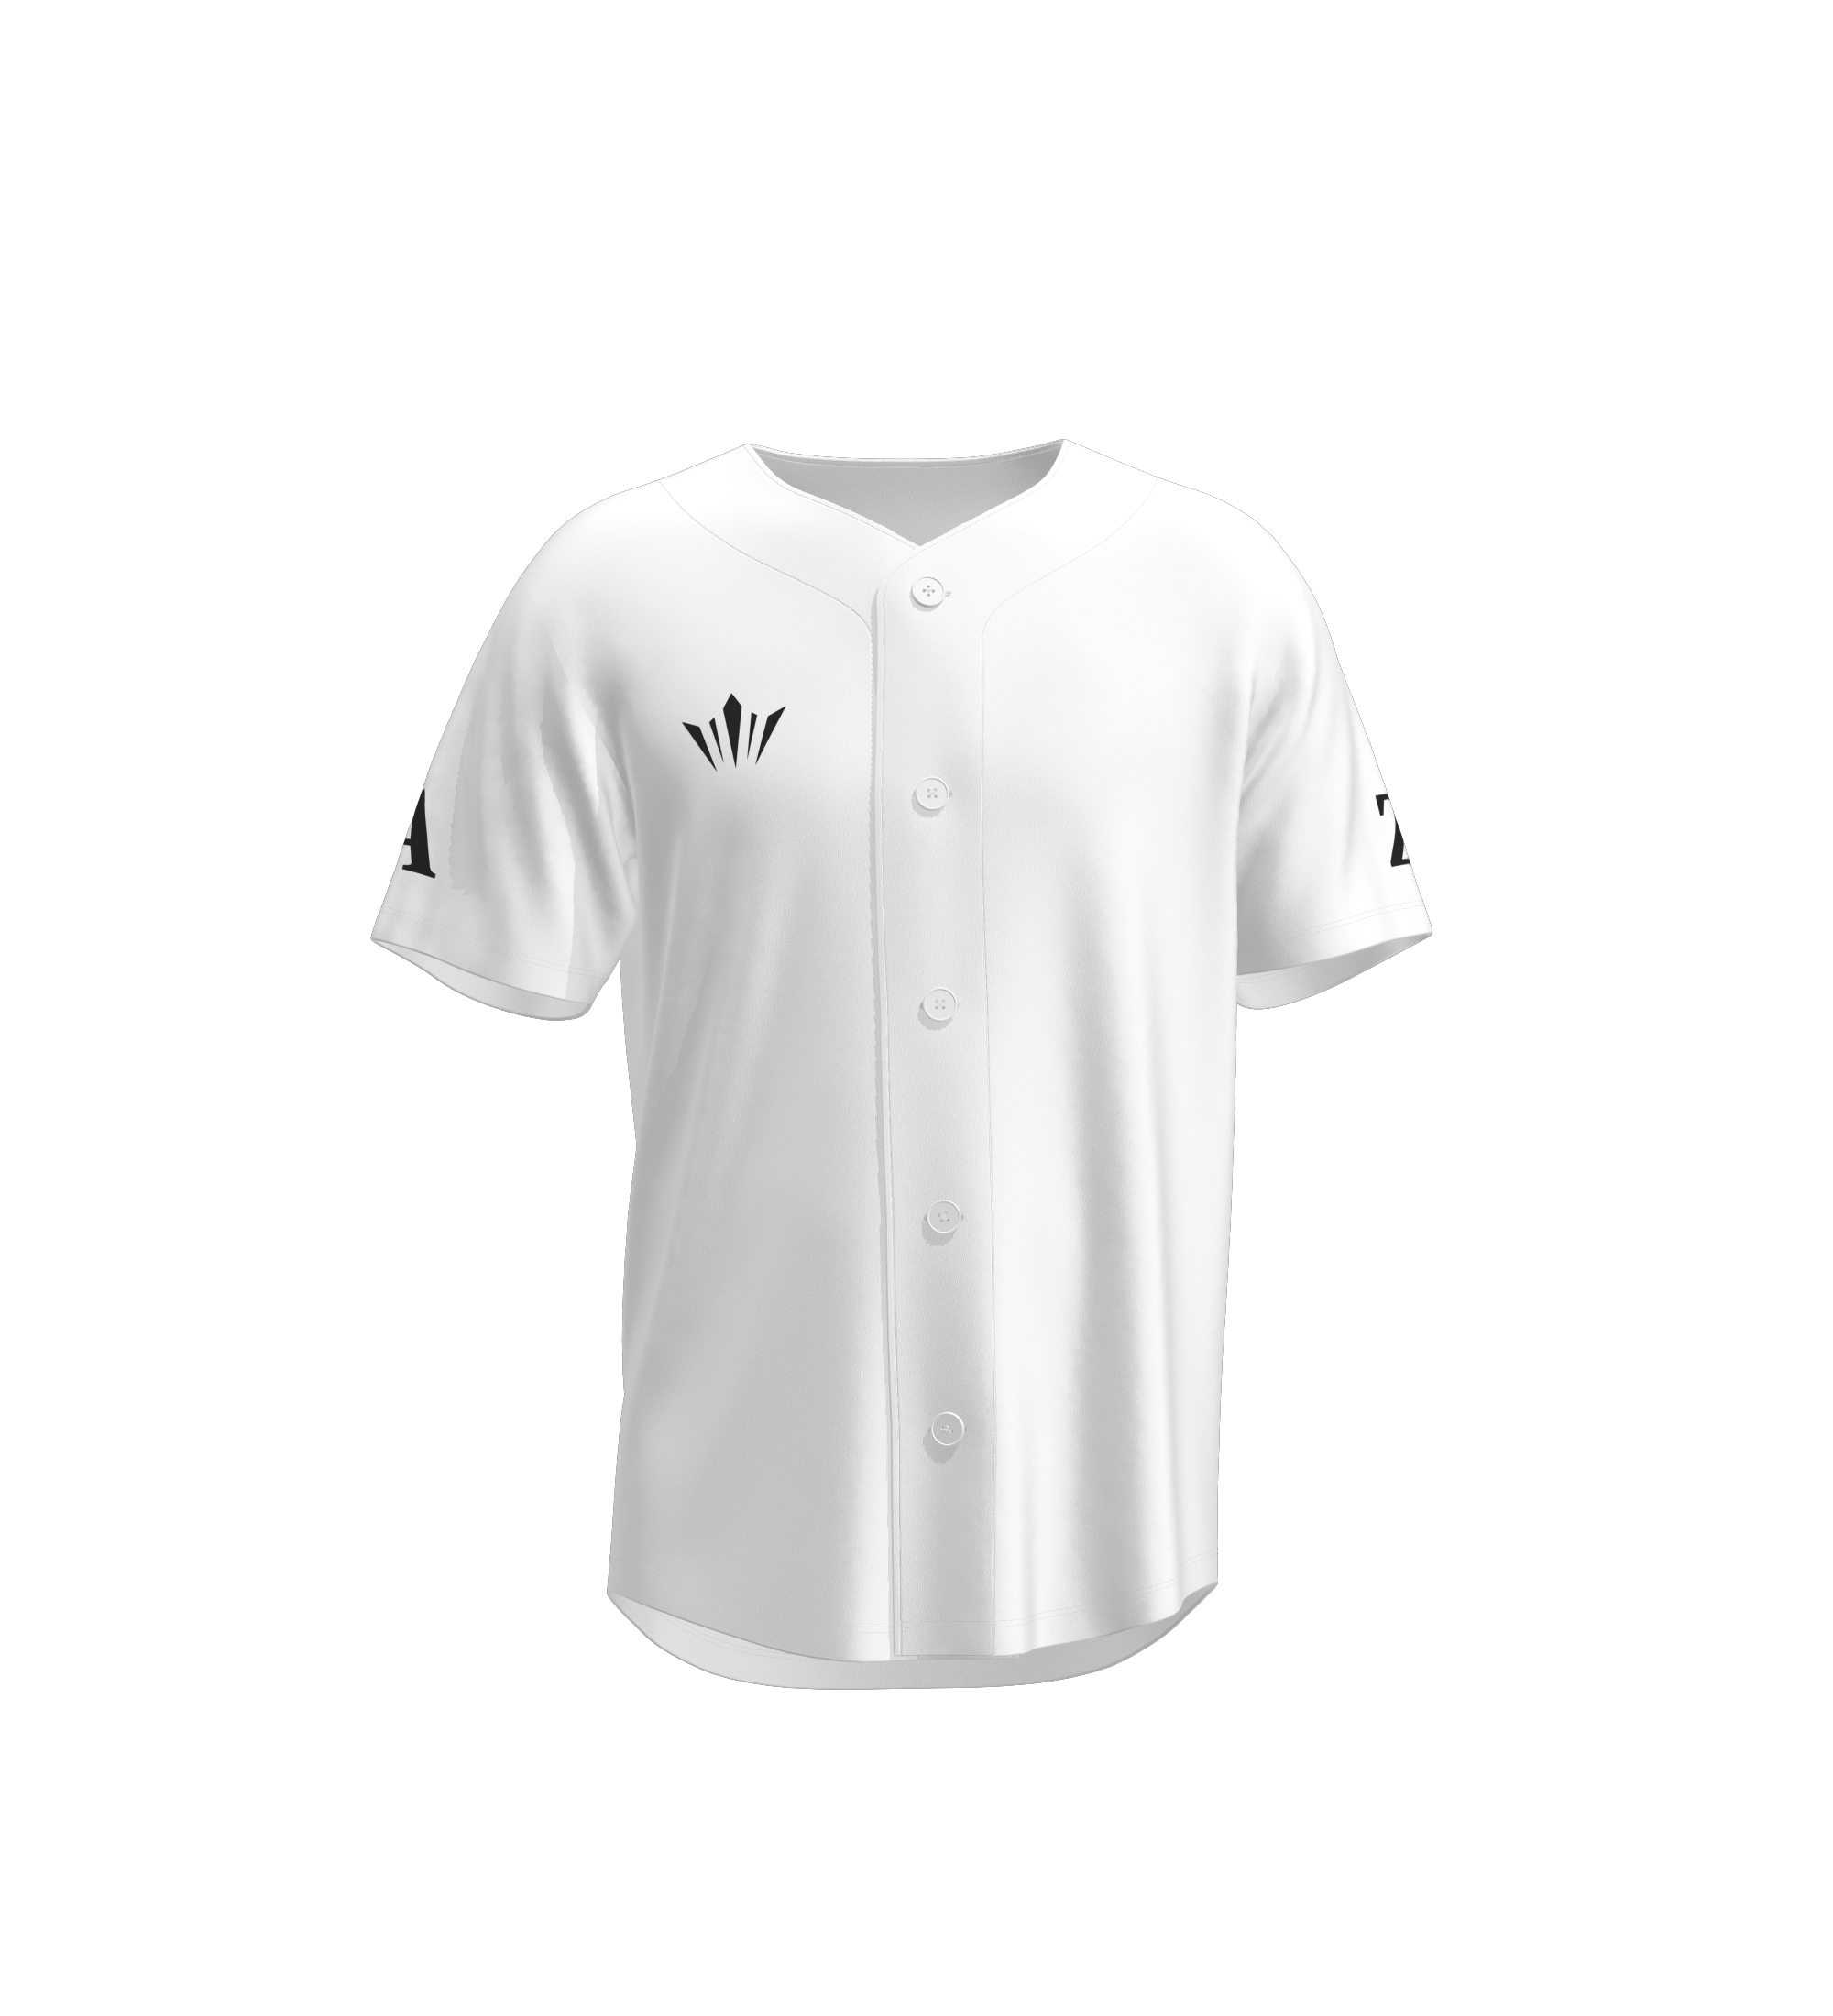 Z&J Baseball Jersey - White (Customizable)